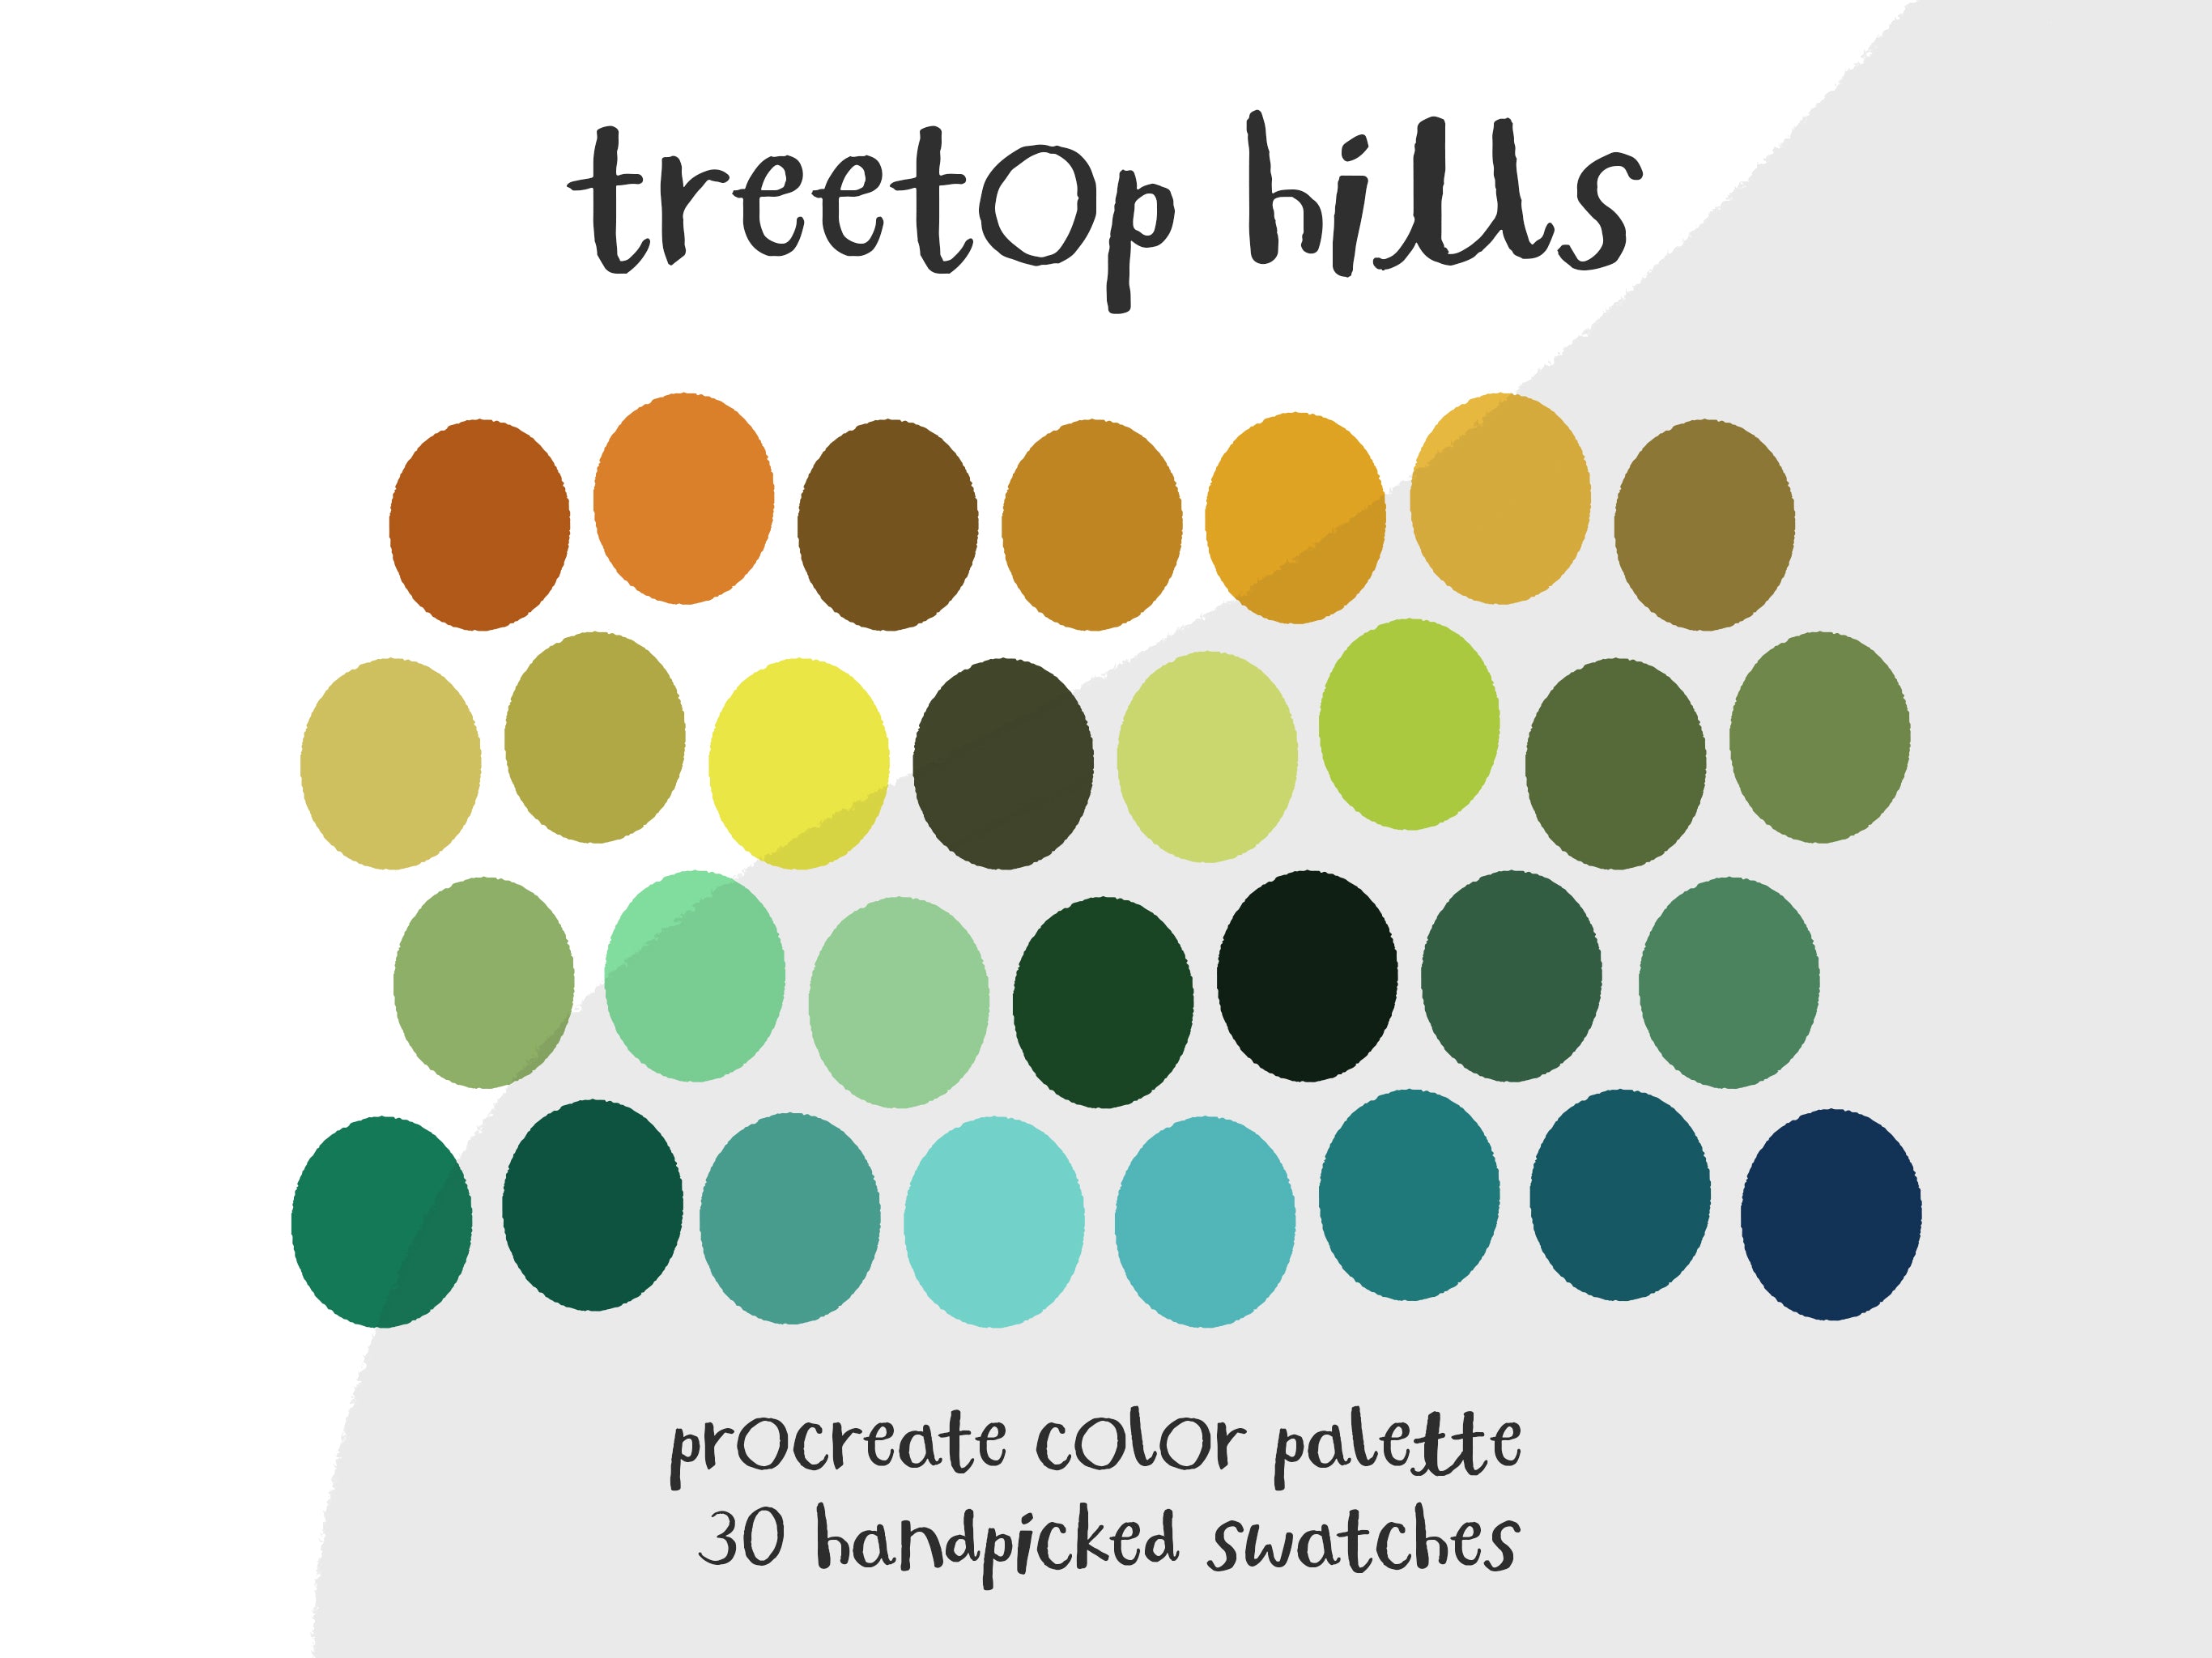 Treetop Hills